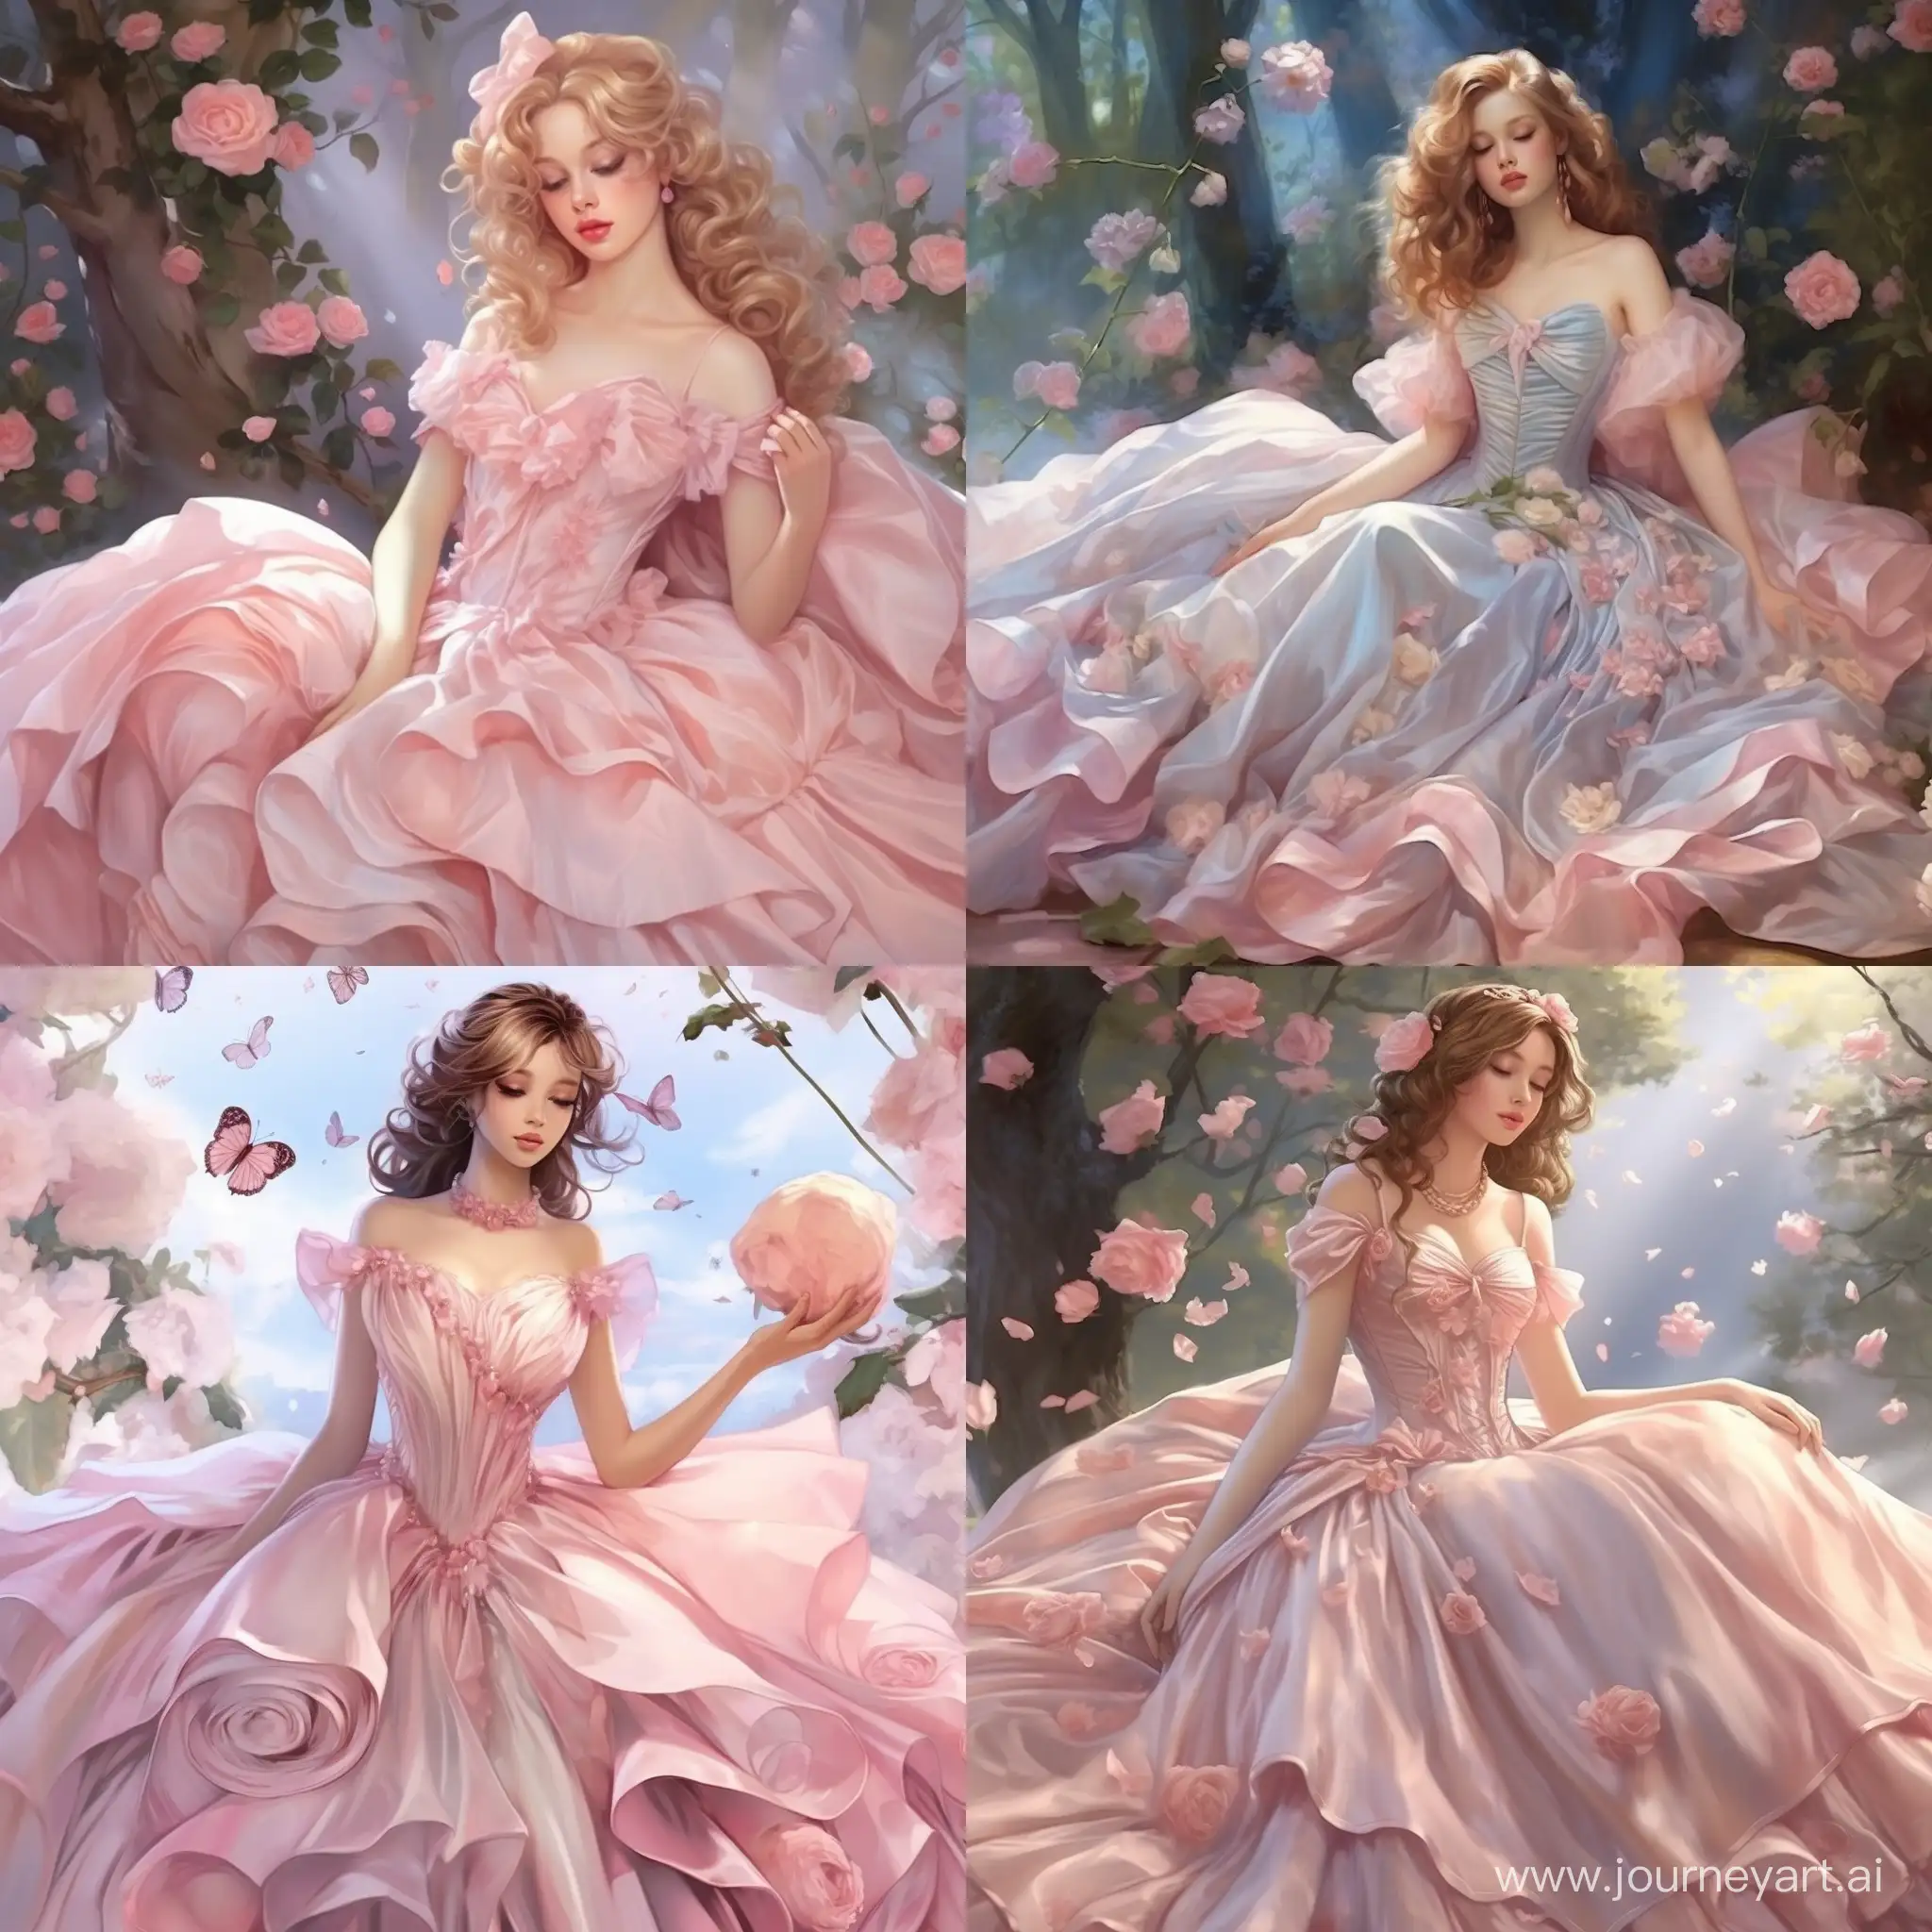 Enchanted-Rose-Garden-Majestic-Fantasy-Portrait-of-a-Woman-in-Silk-Ballgown